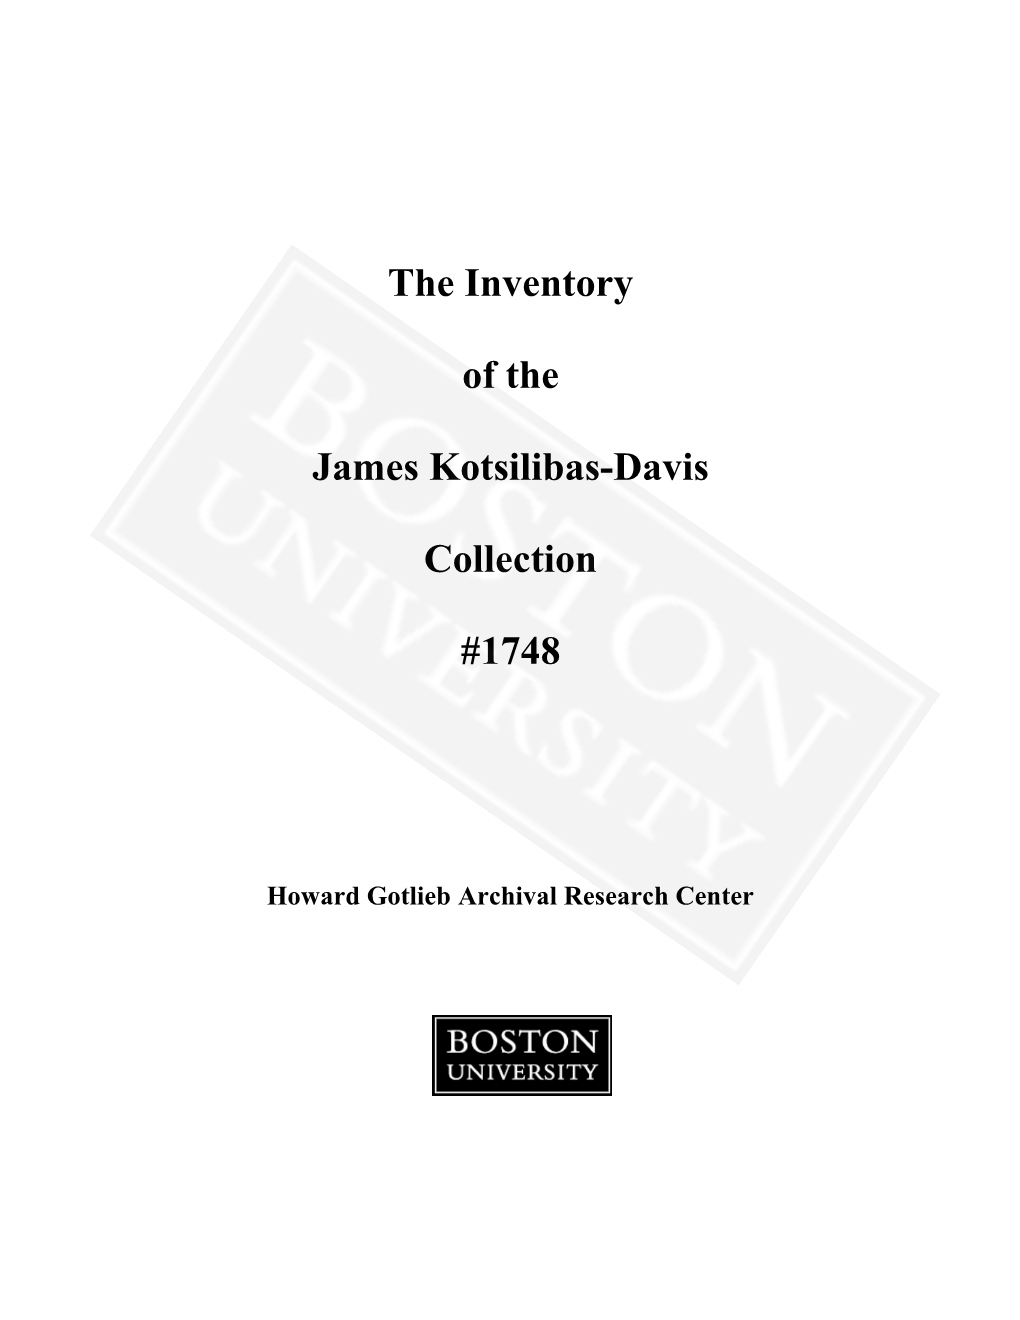 The Inventory of the James Kotsilibas-Davis Collection #1748